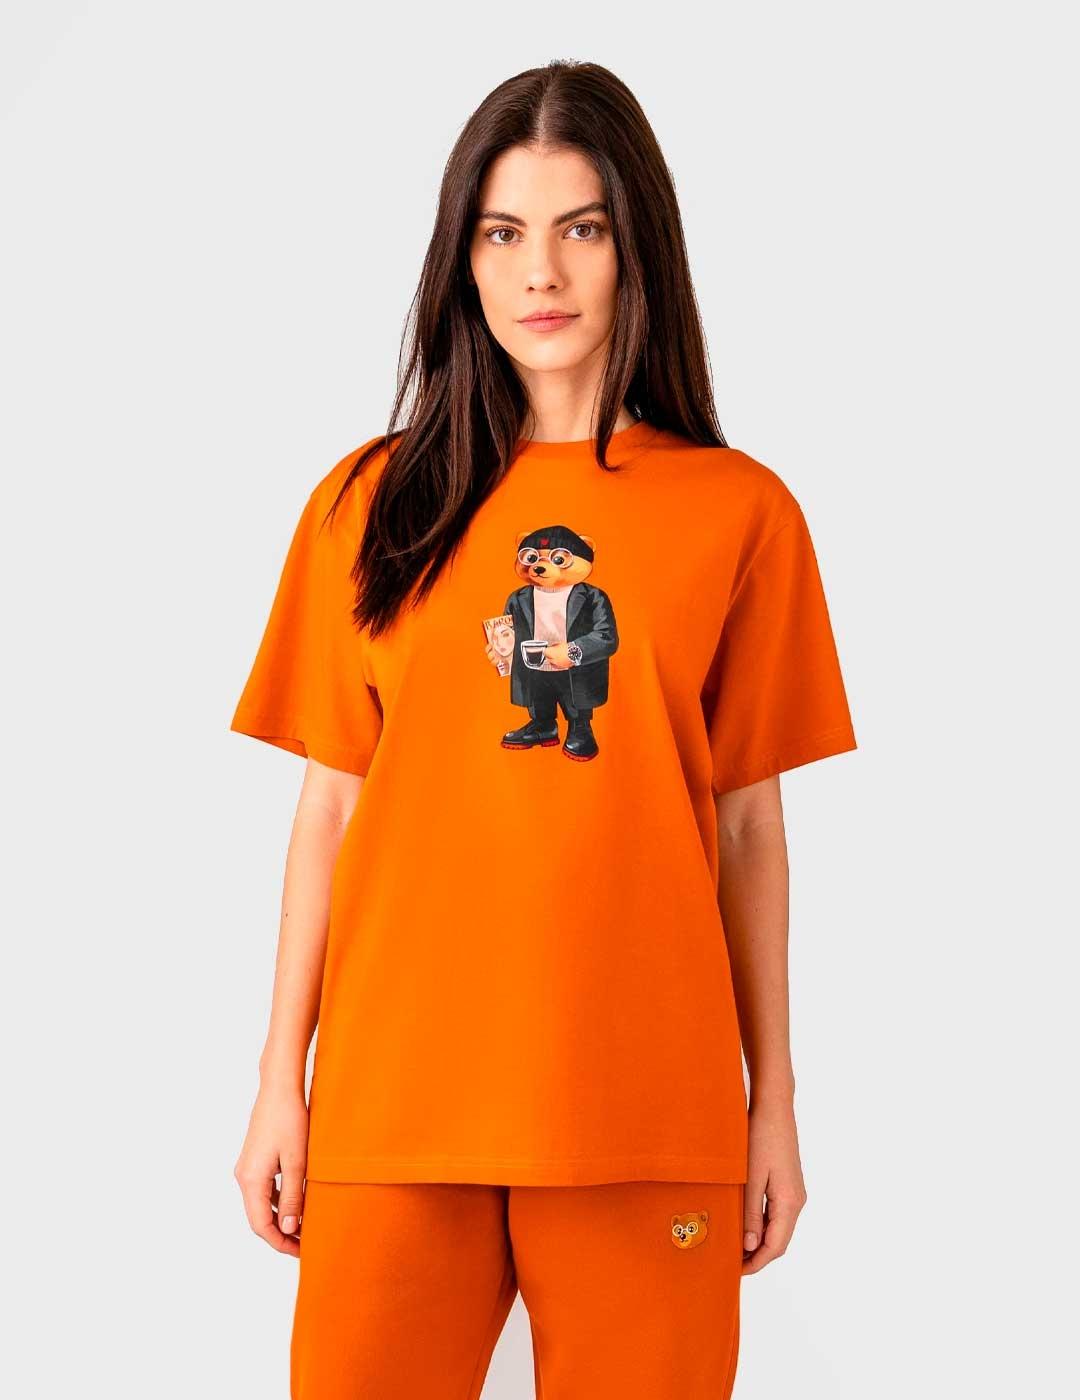 Camiseta Baron Filou LV naranja para hombre y mujer